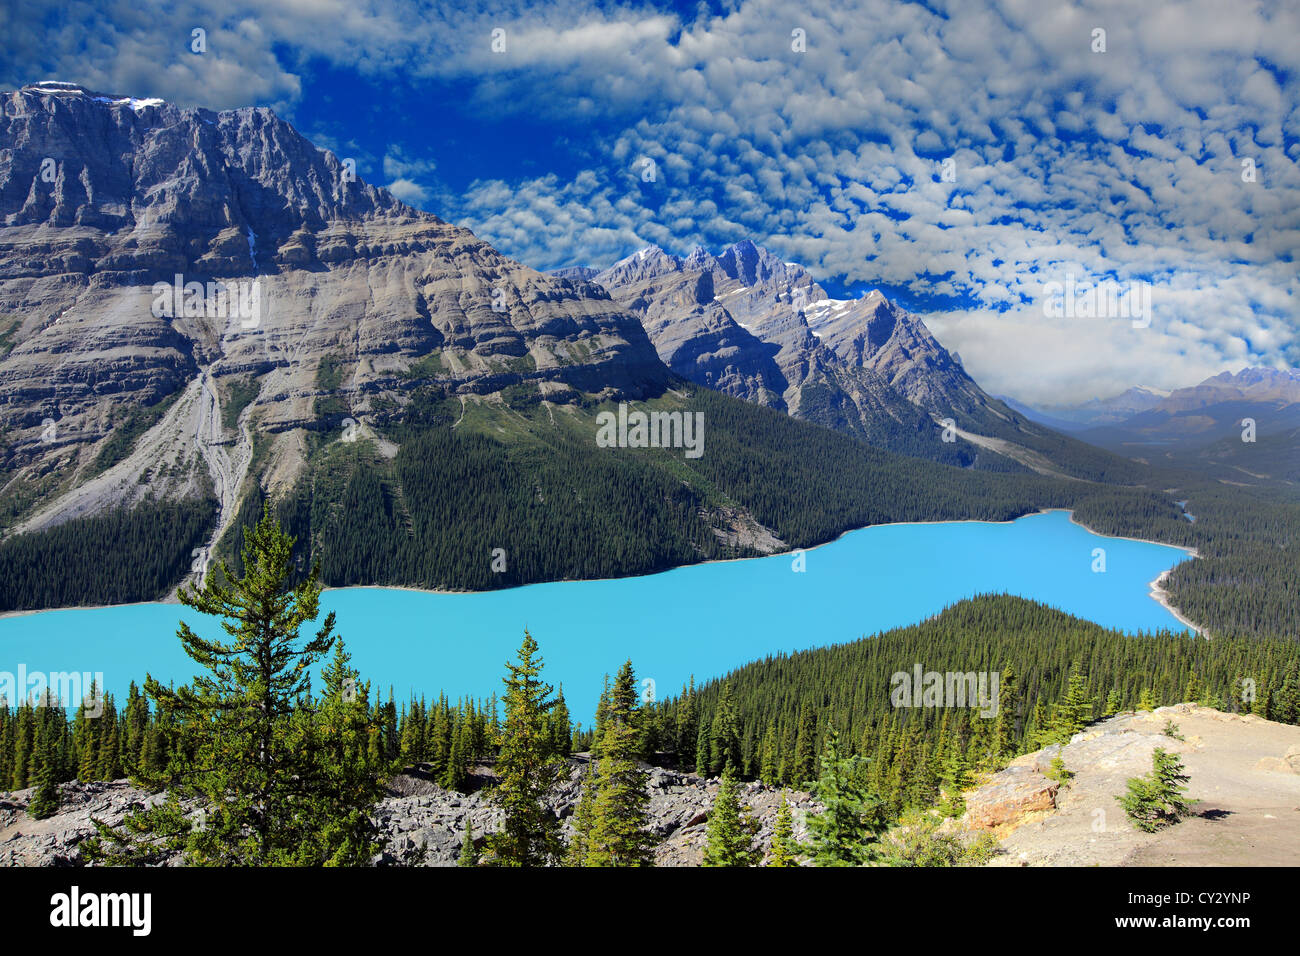 peyto lake alberta canada Banff national park Stock Photo